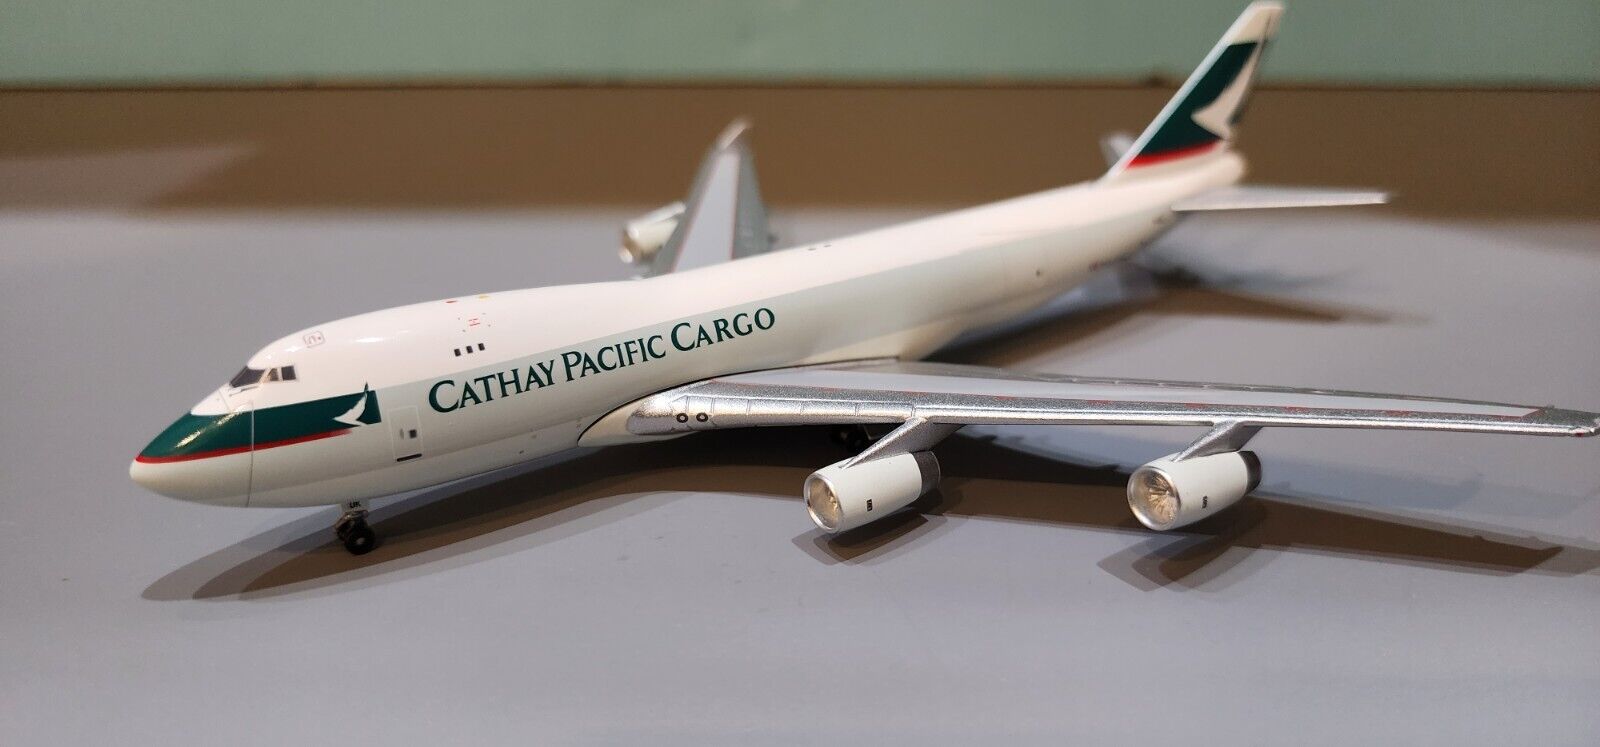 AV400 CATHAY PACIFIC CARGO 747-400F 1:400 SCALE DIECAST METAL MODEL